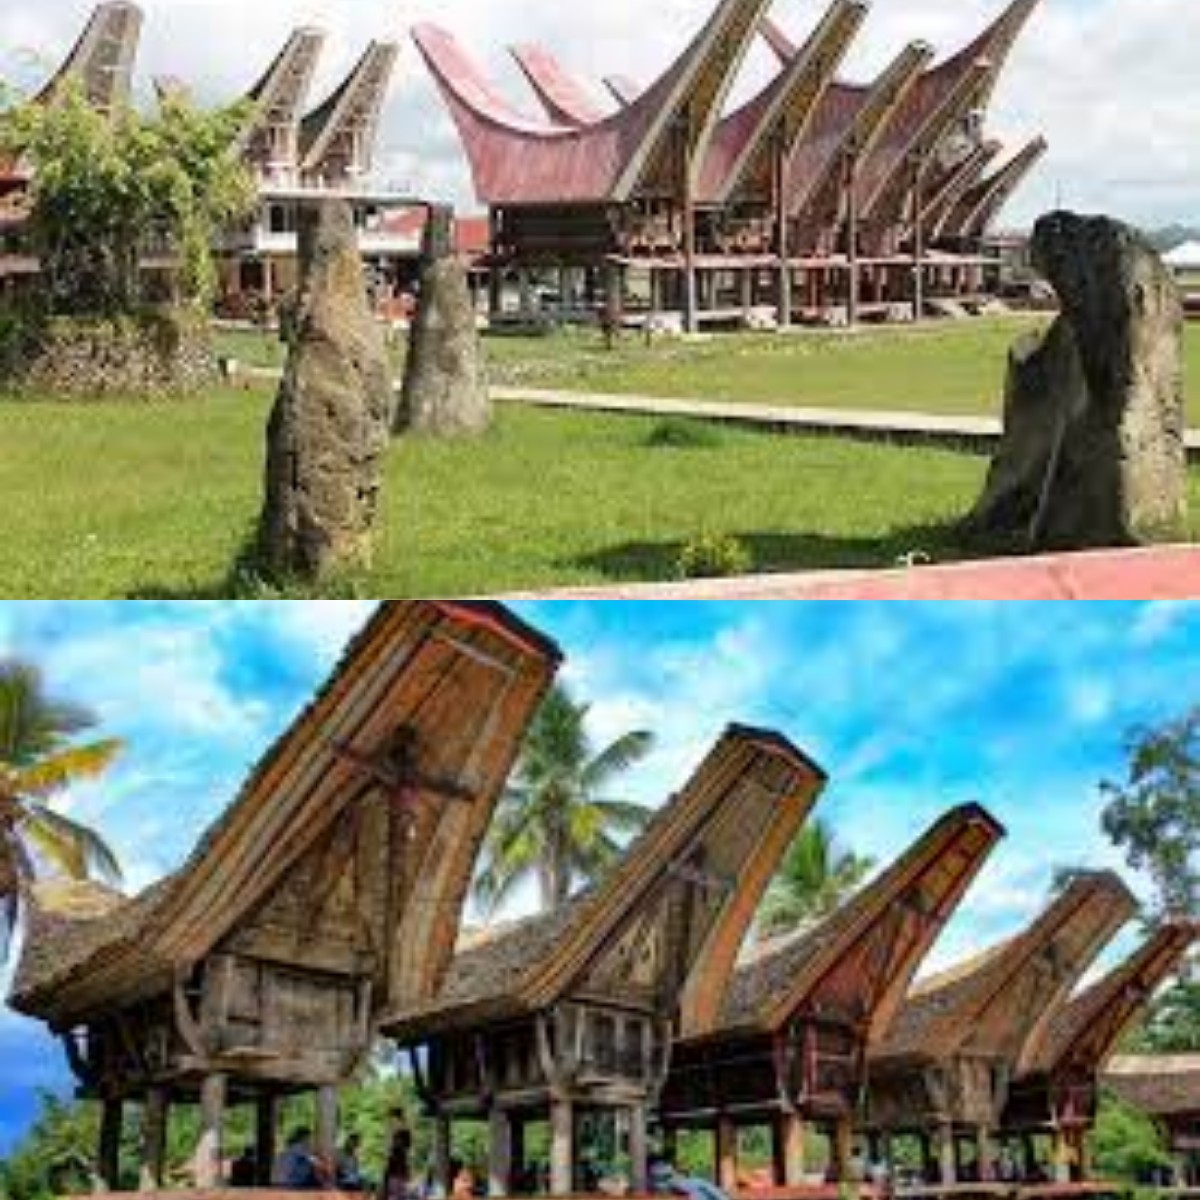 Dibalik Keindahan Tana Toraja! Ternyata Ada Keunikan Rumah Adat Tongkonan dari Toraja yang Harus Kamu tau! 